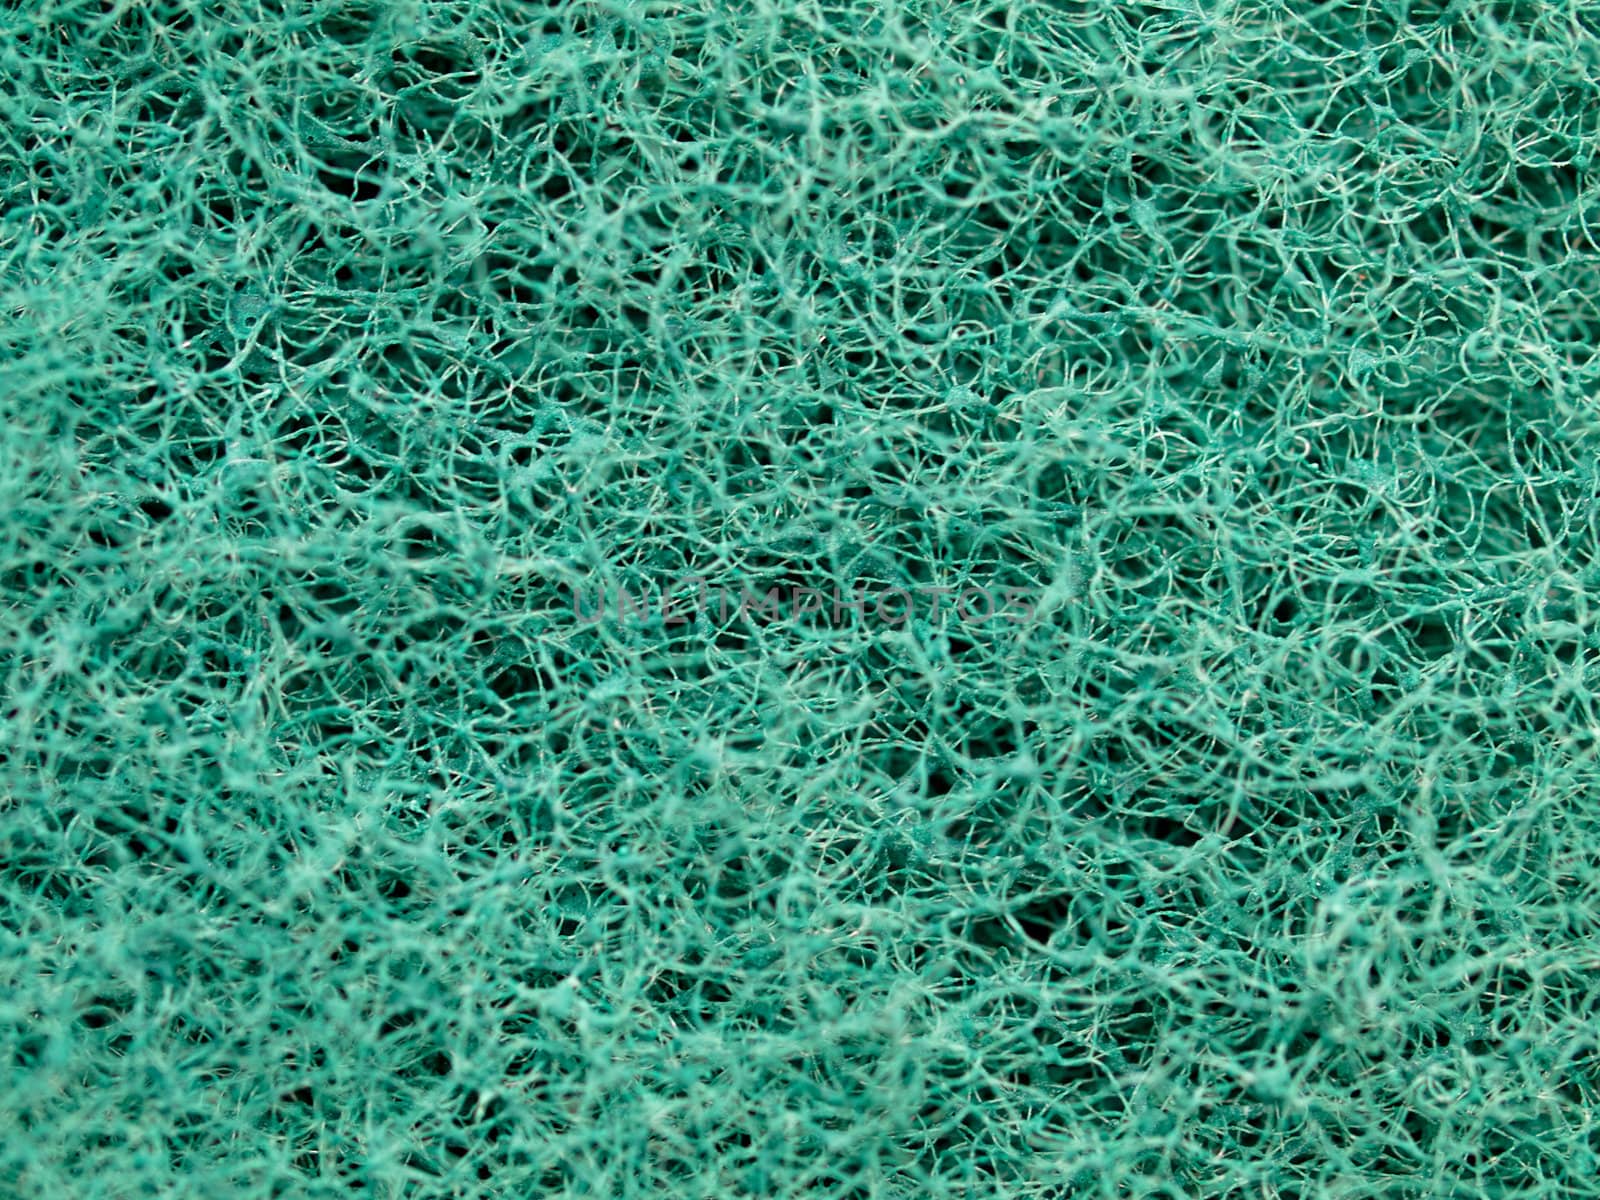 Macro picture of a green scrub sponge